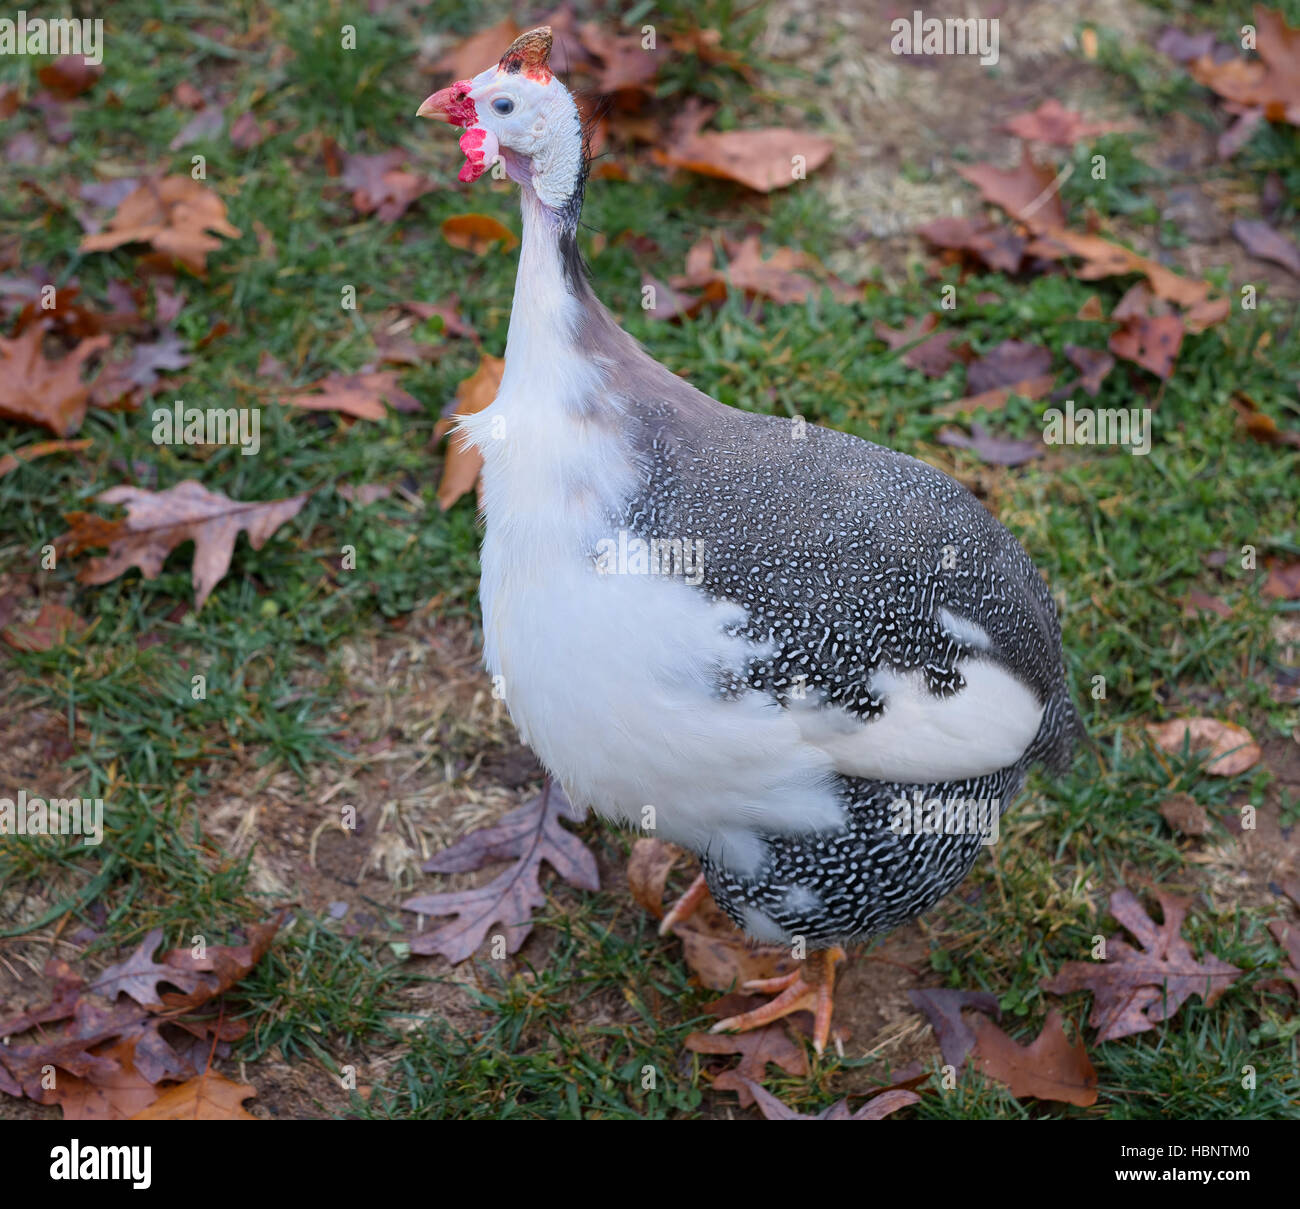 Guinea Fowl bird on the ground in Autumn. Stock Photo